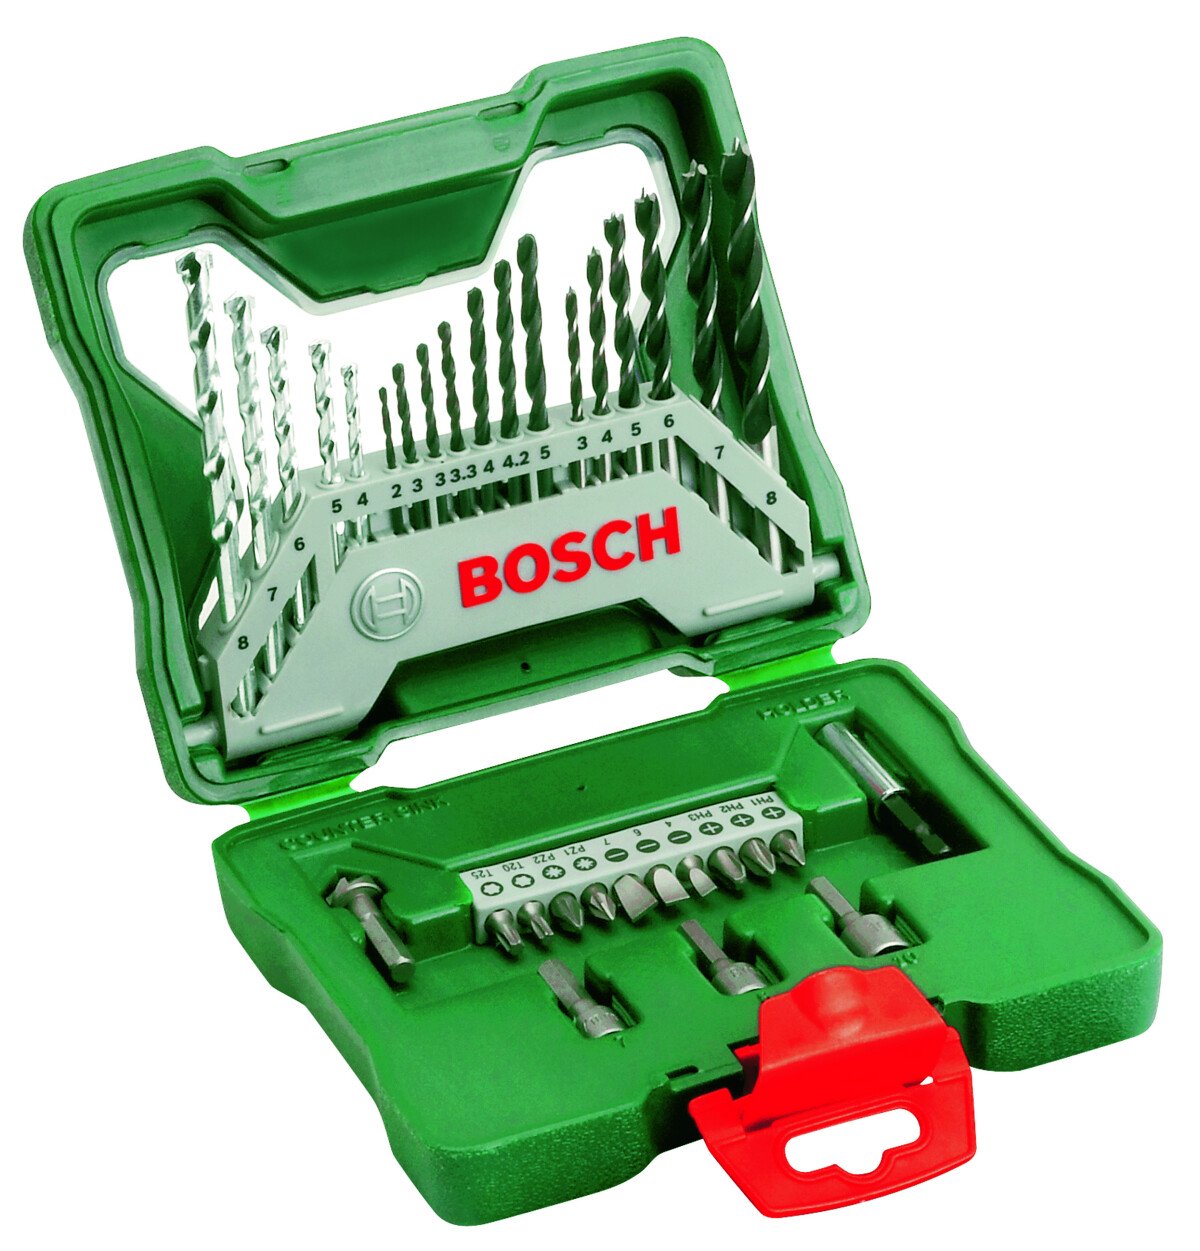 Bosch 2607019325 33 Pc X Line Set